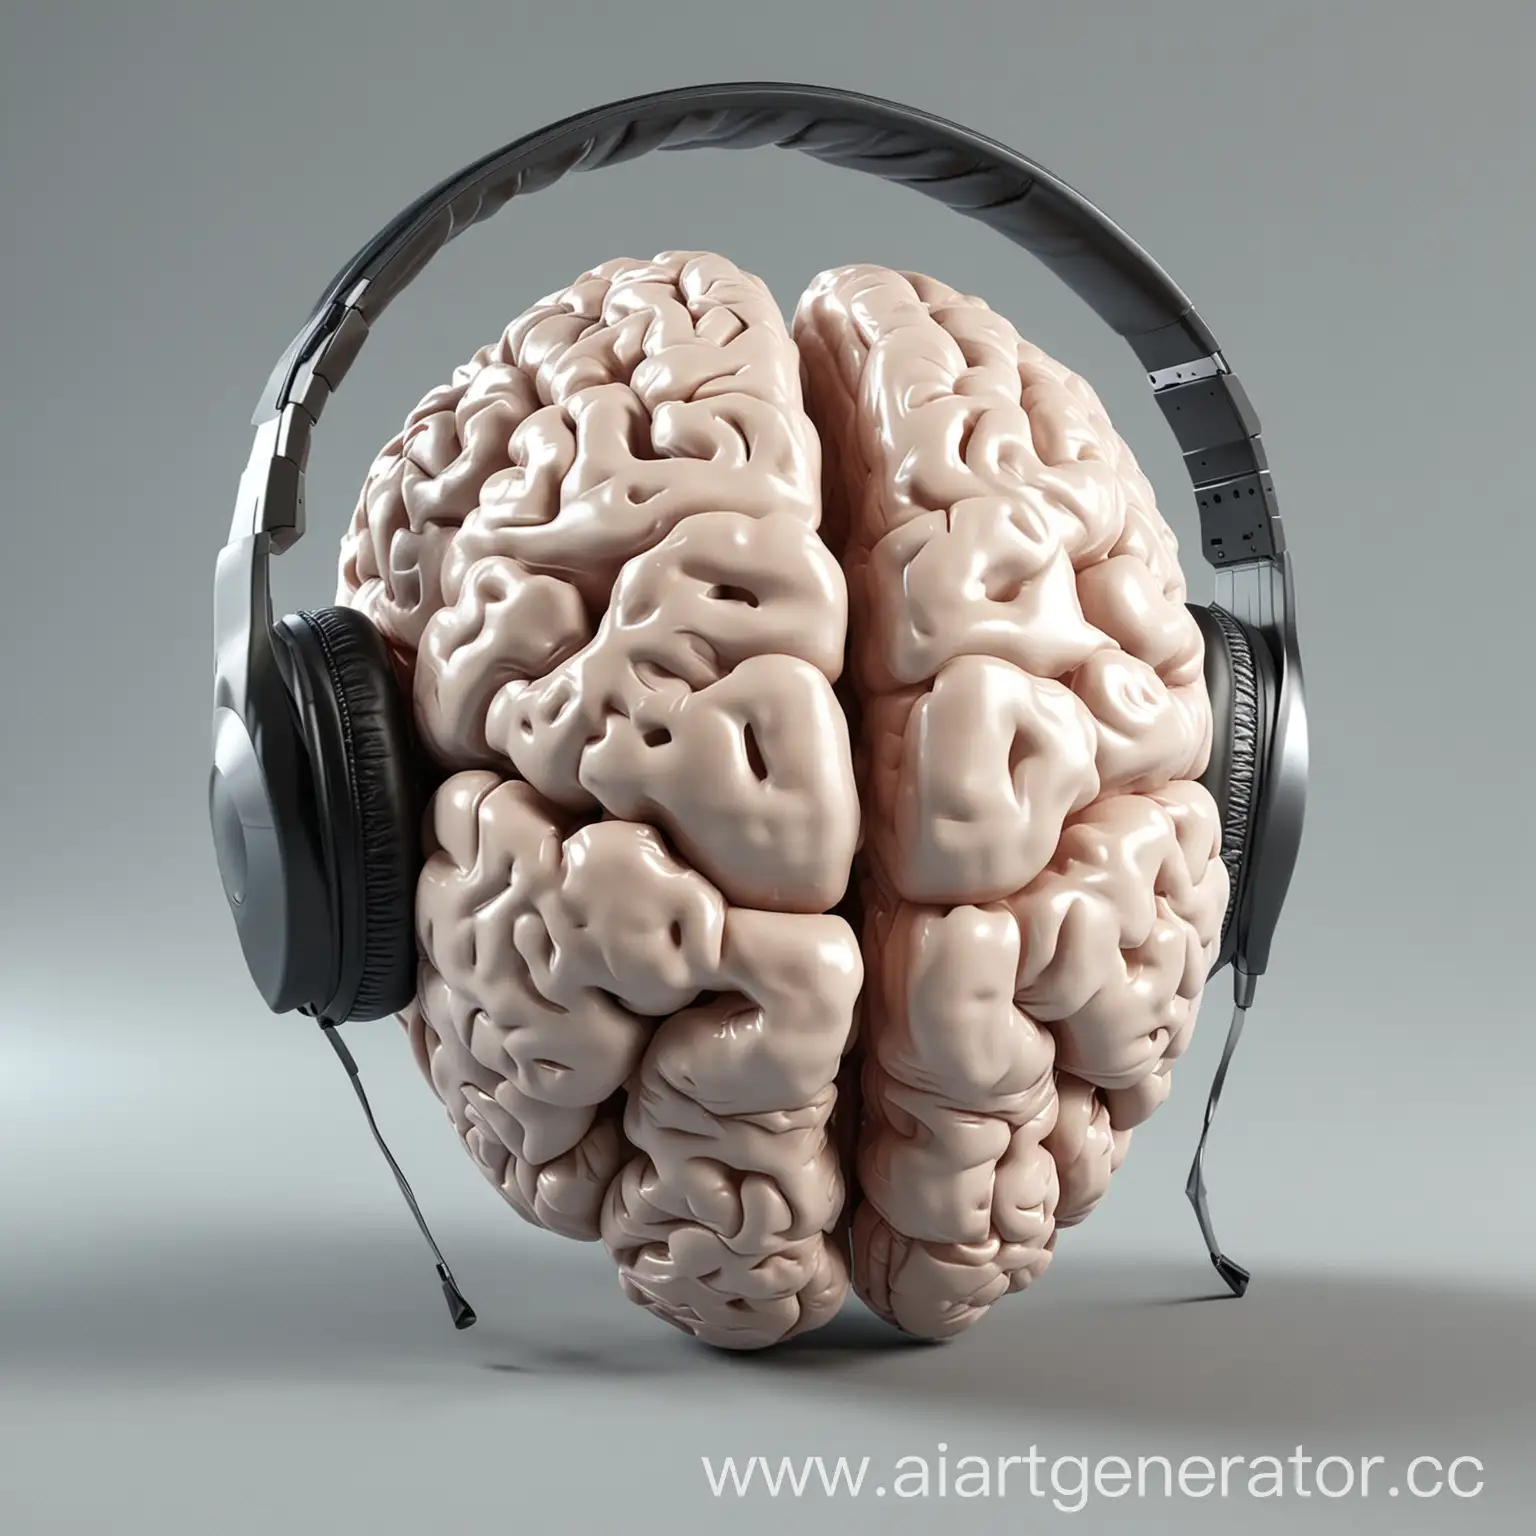 3D-Digital-Illustration-of-Brain-Wearing-Headphones